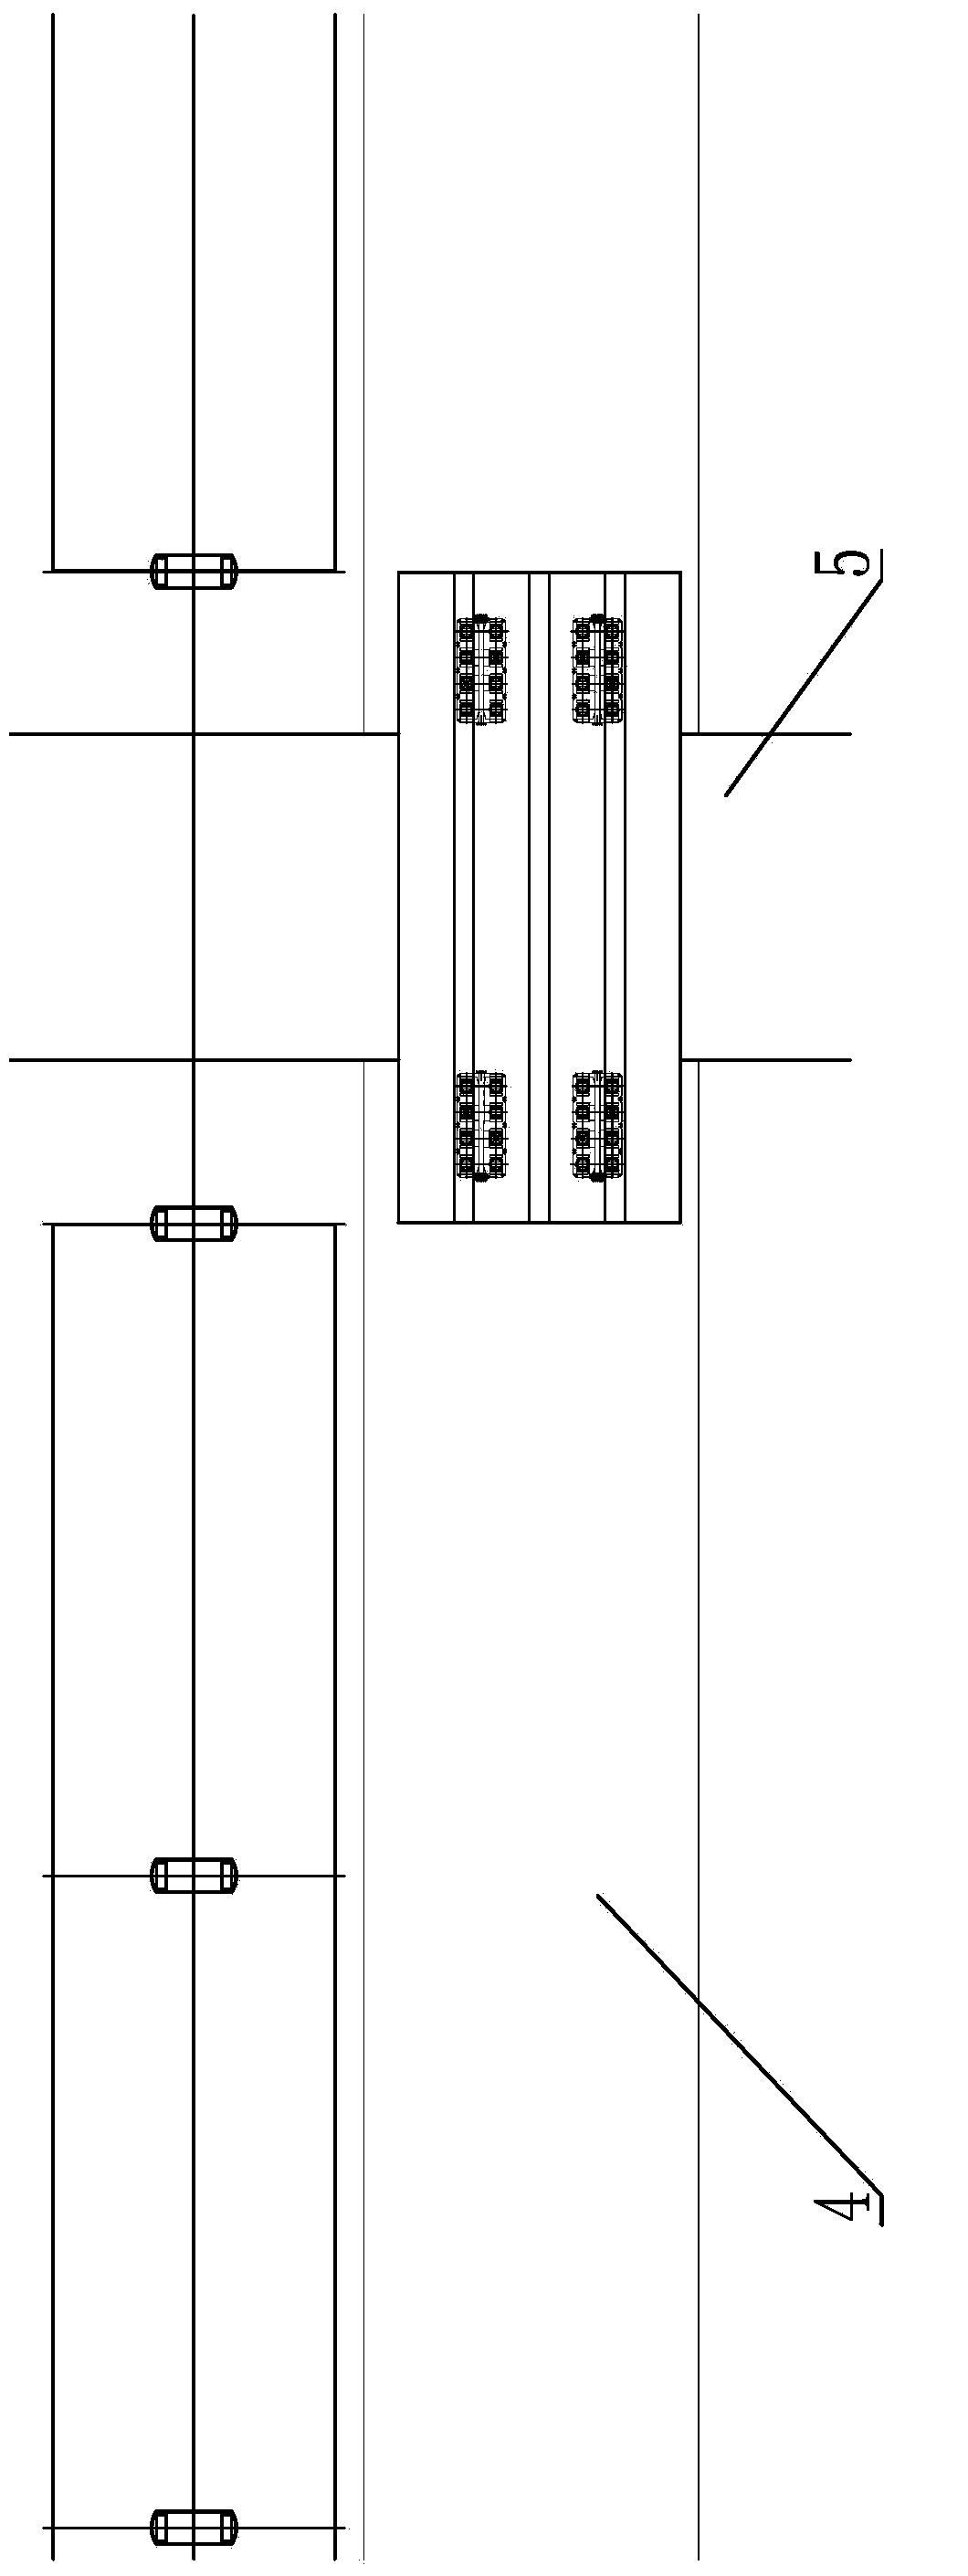 Quick constructing method of cross-line bridge